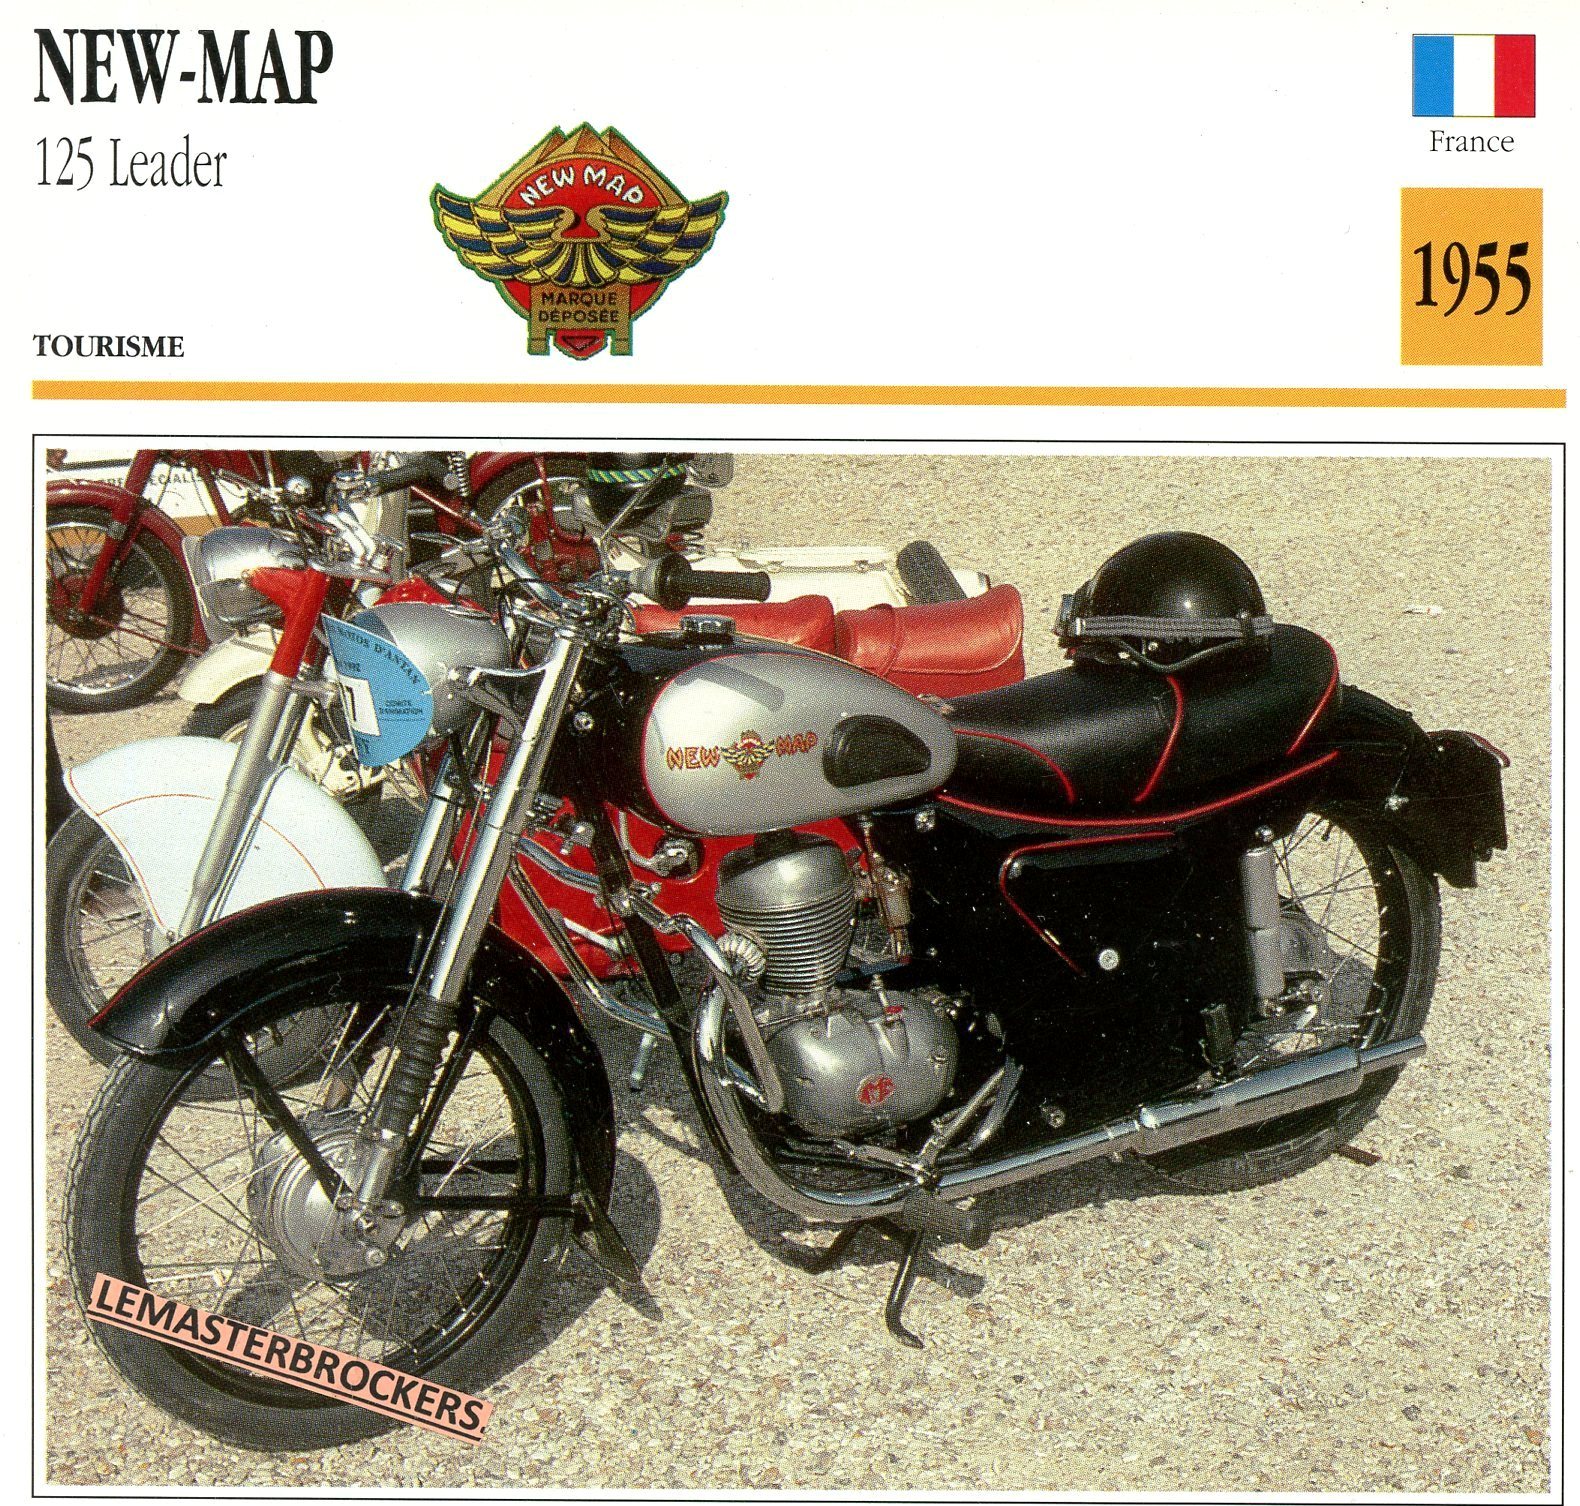 9 1 new-mpa-leader-125-newmap-fiche-moto-atlas-lemasterbrockers-card-motorcycle.jpeg